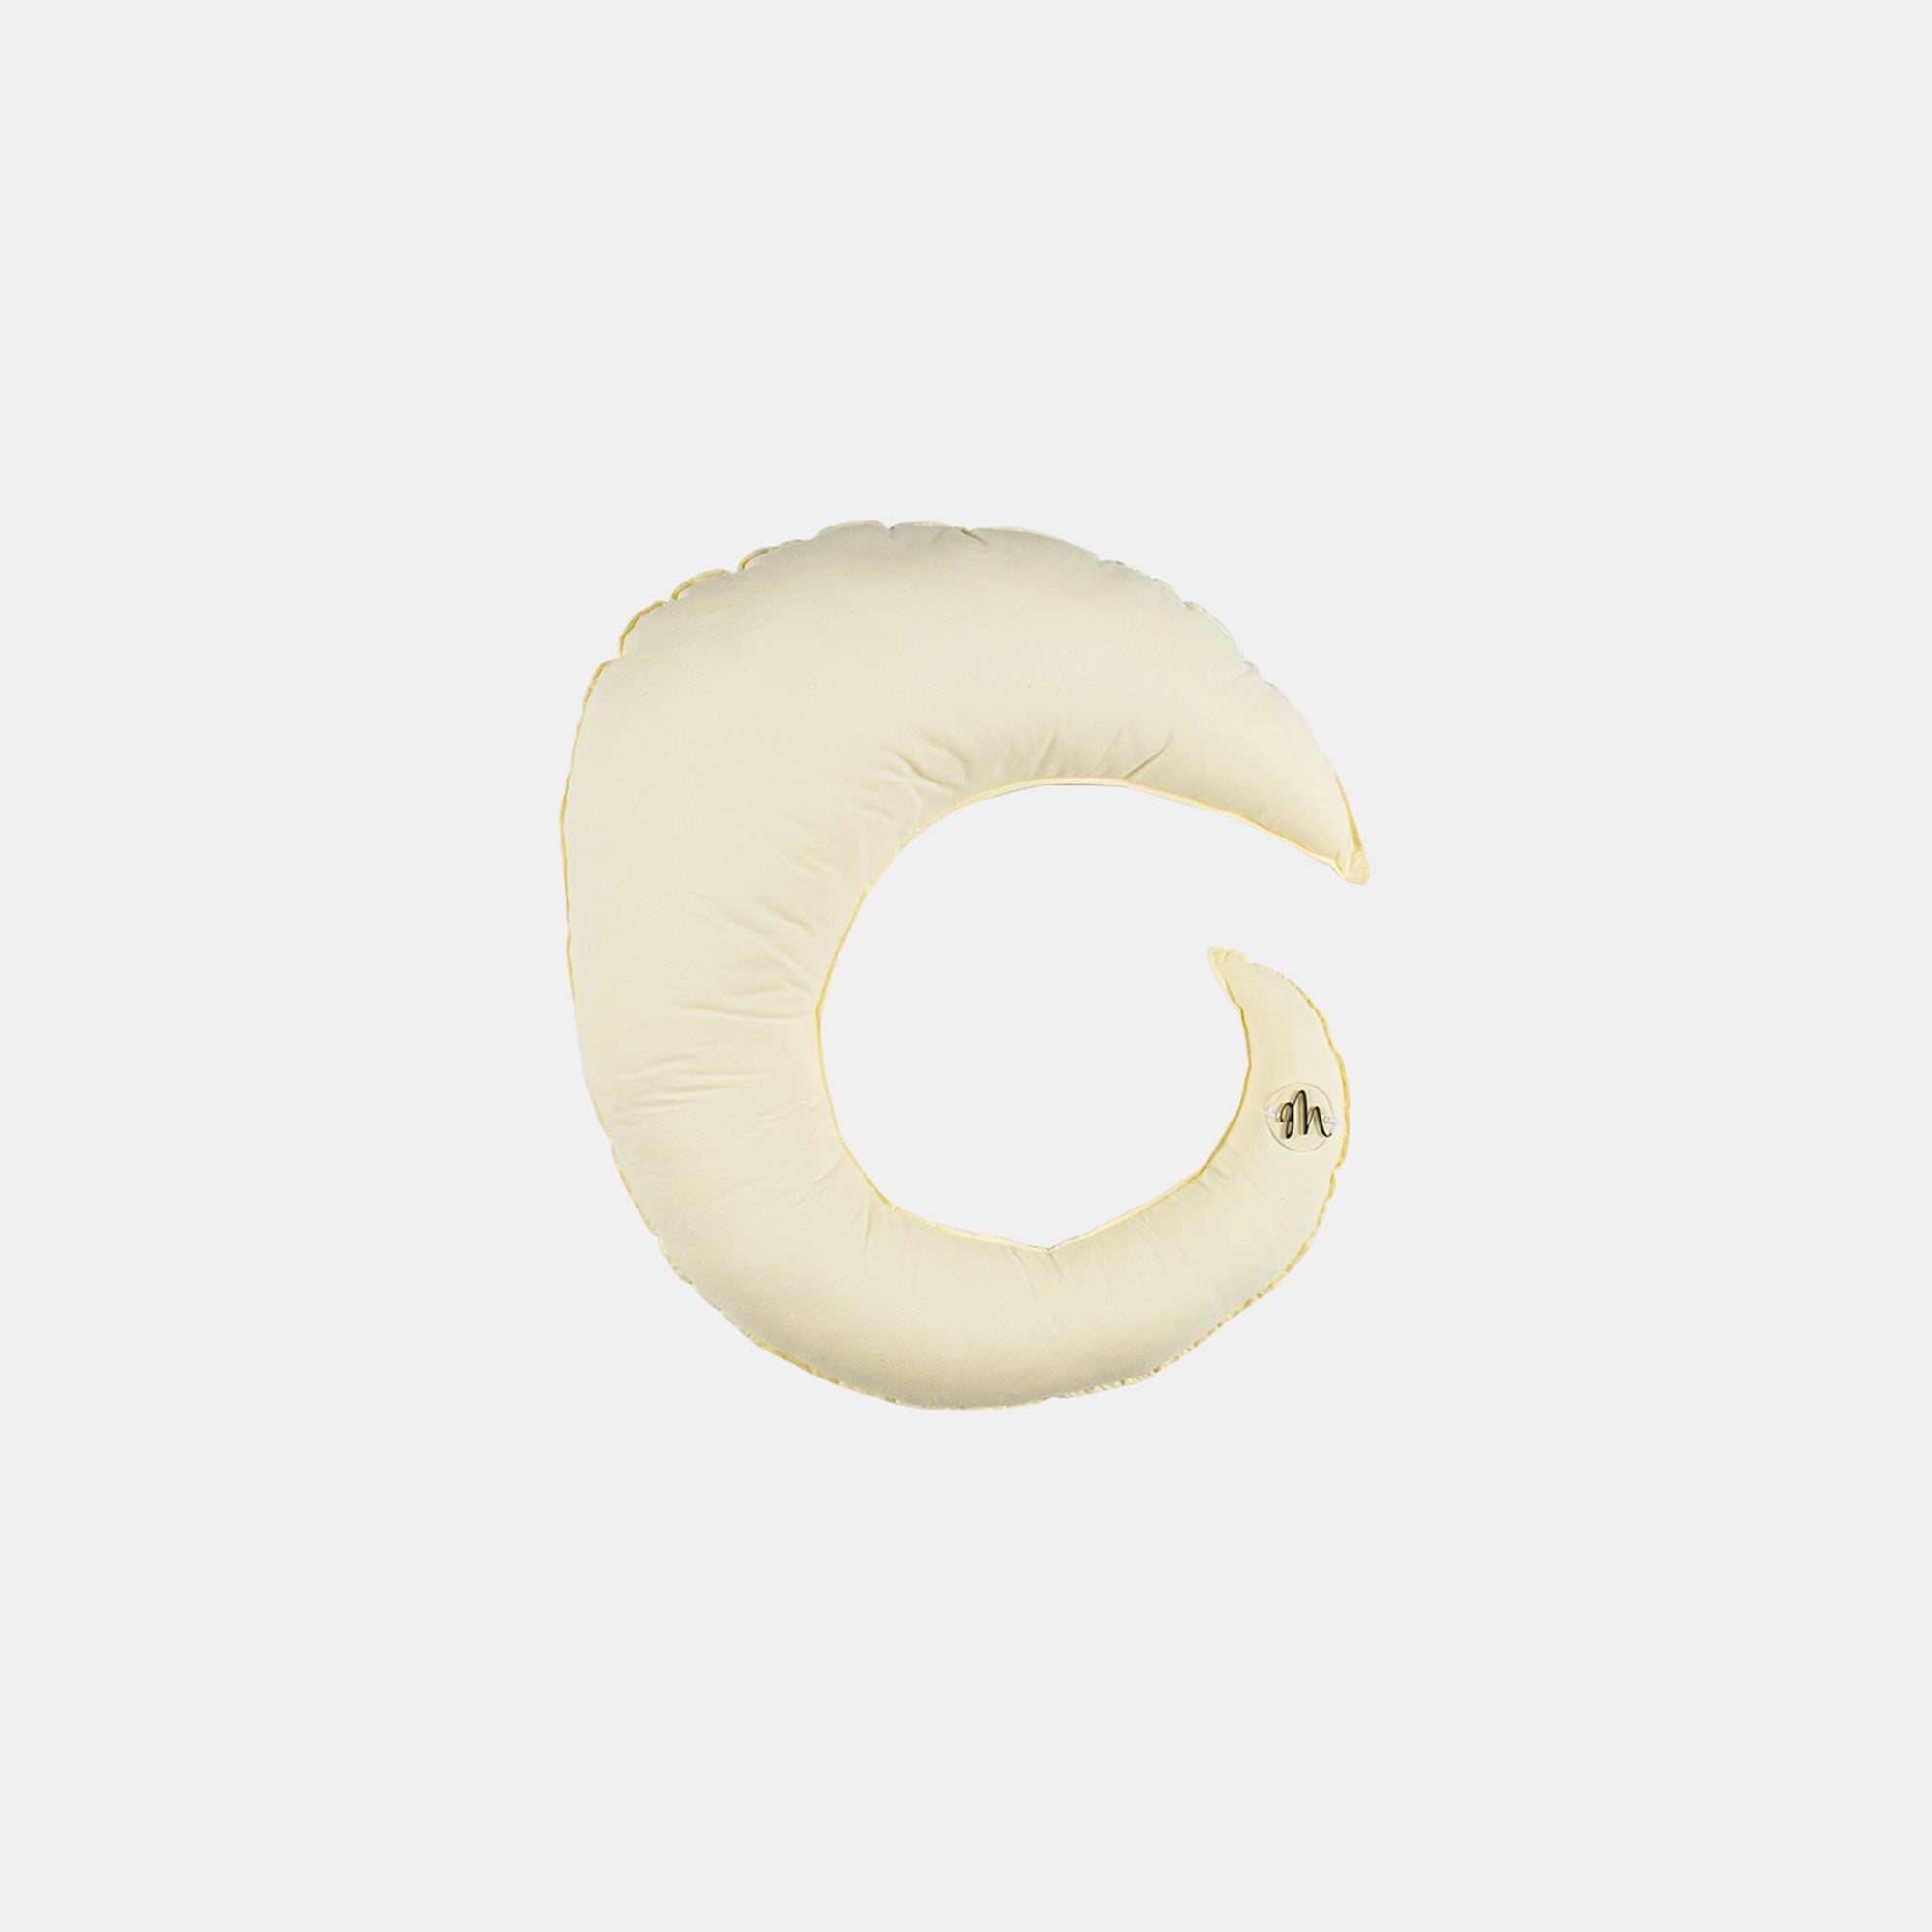 Handmade moon-shaped cushion